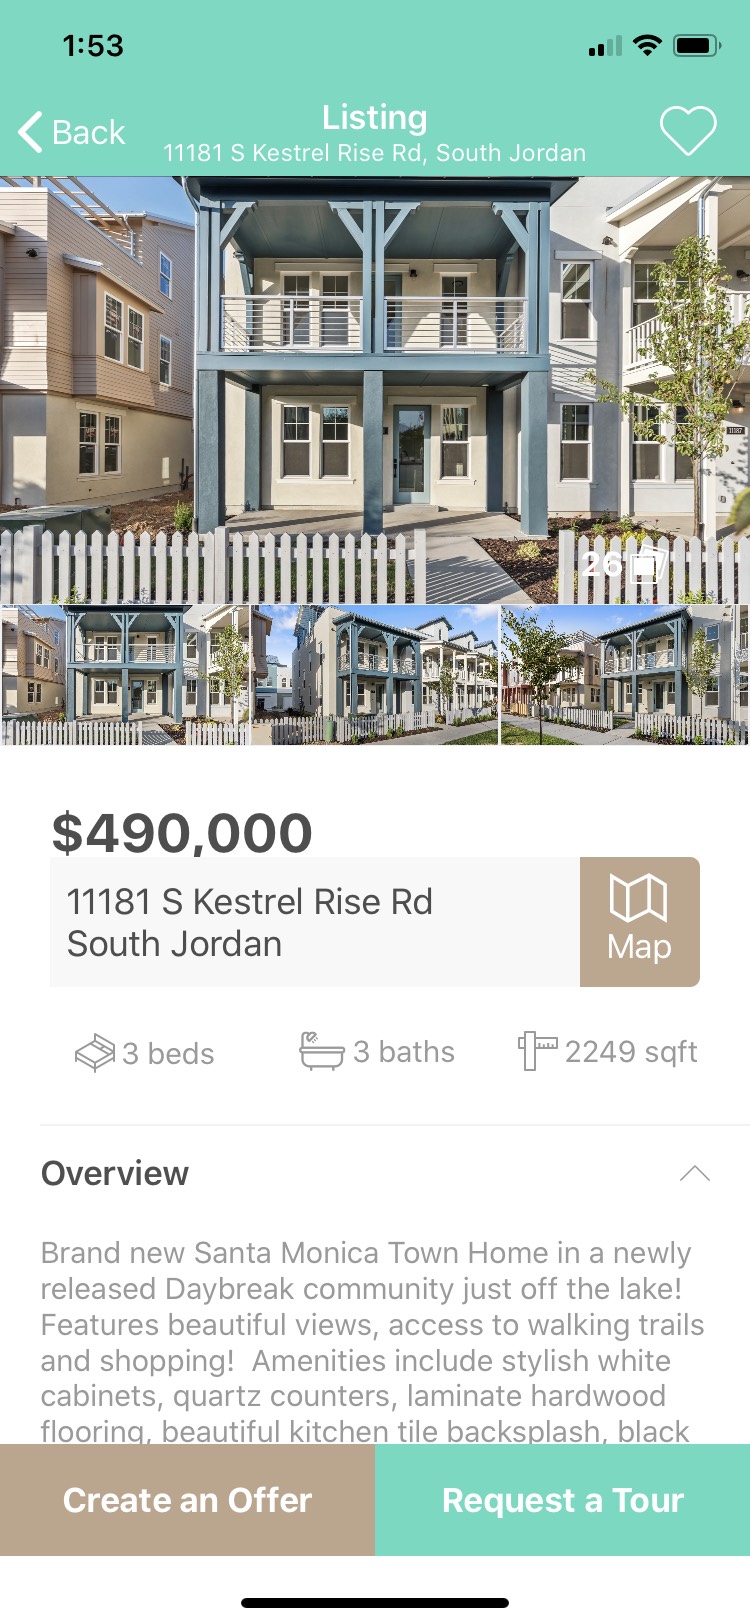 app screenshot of a listing